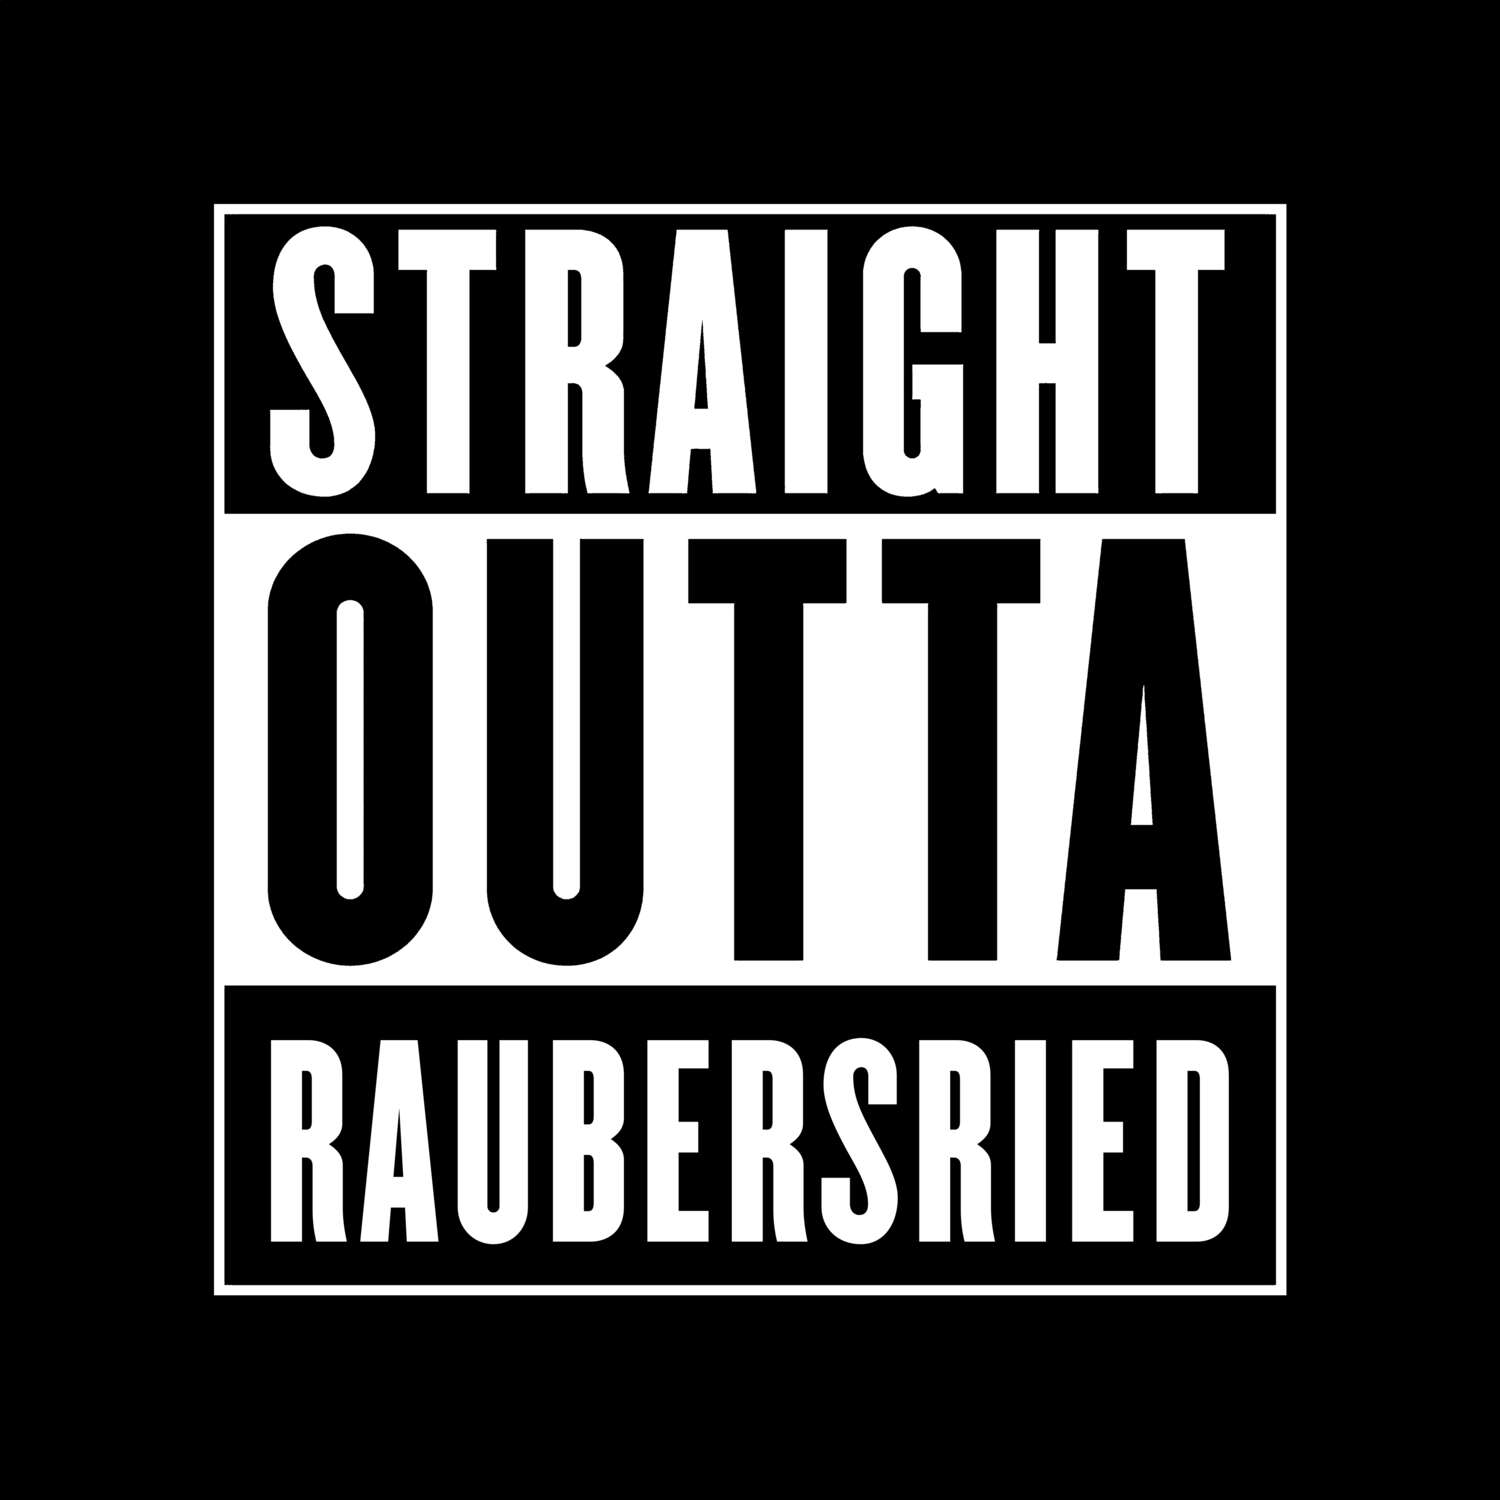 Raubersried T-Shirt »Straight Outta«